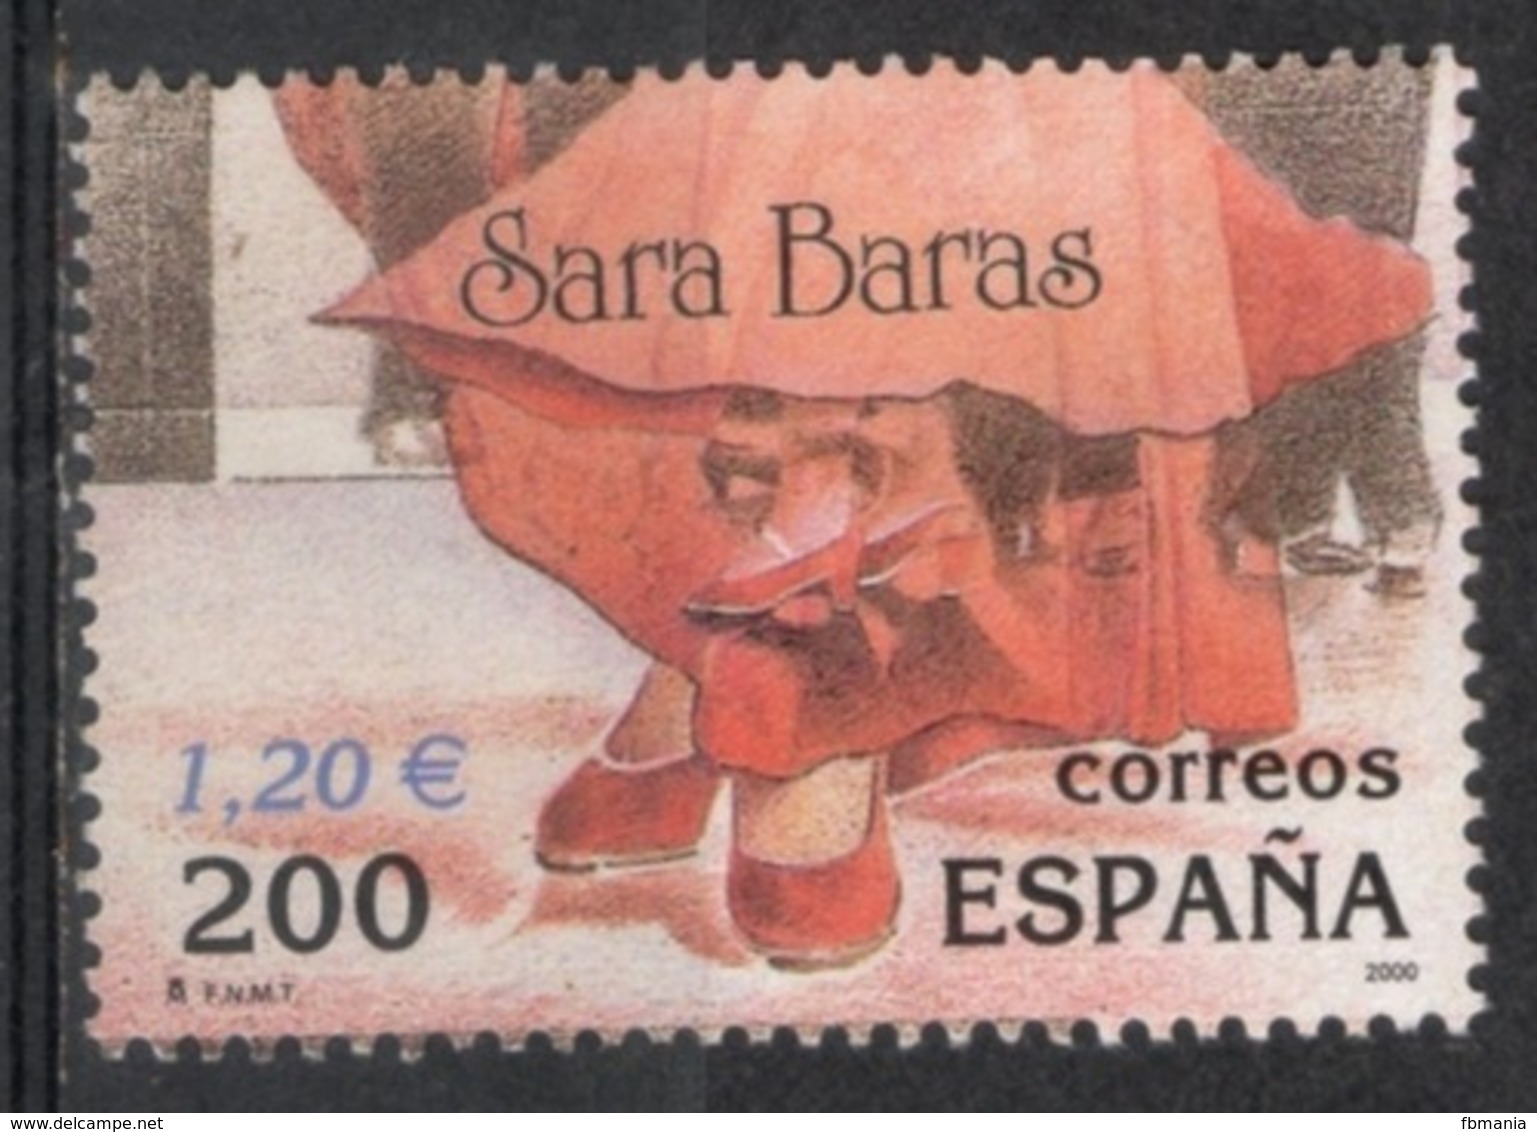 Spagna Spain 2000 - Mostra Filatelica Internazionale International Philatelic Exibition Sara Baras Usato Used - Dance